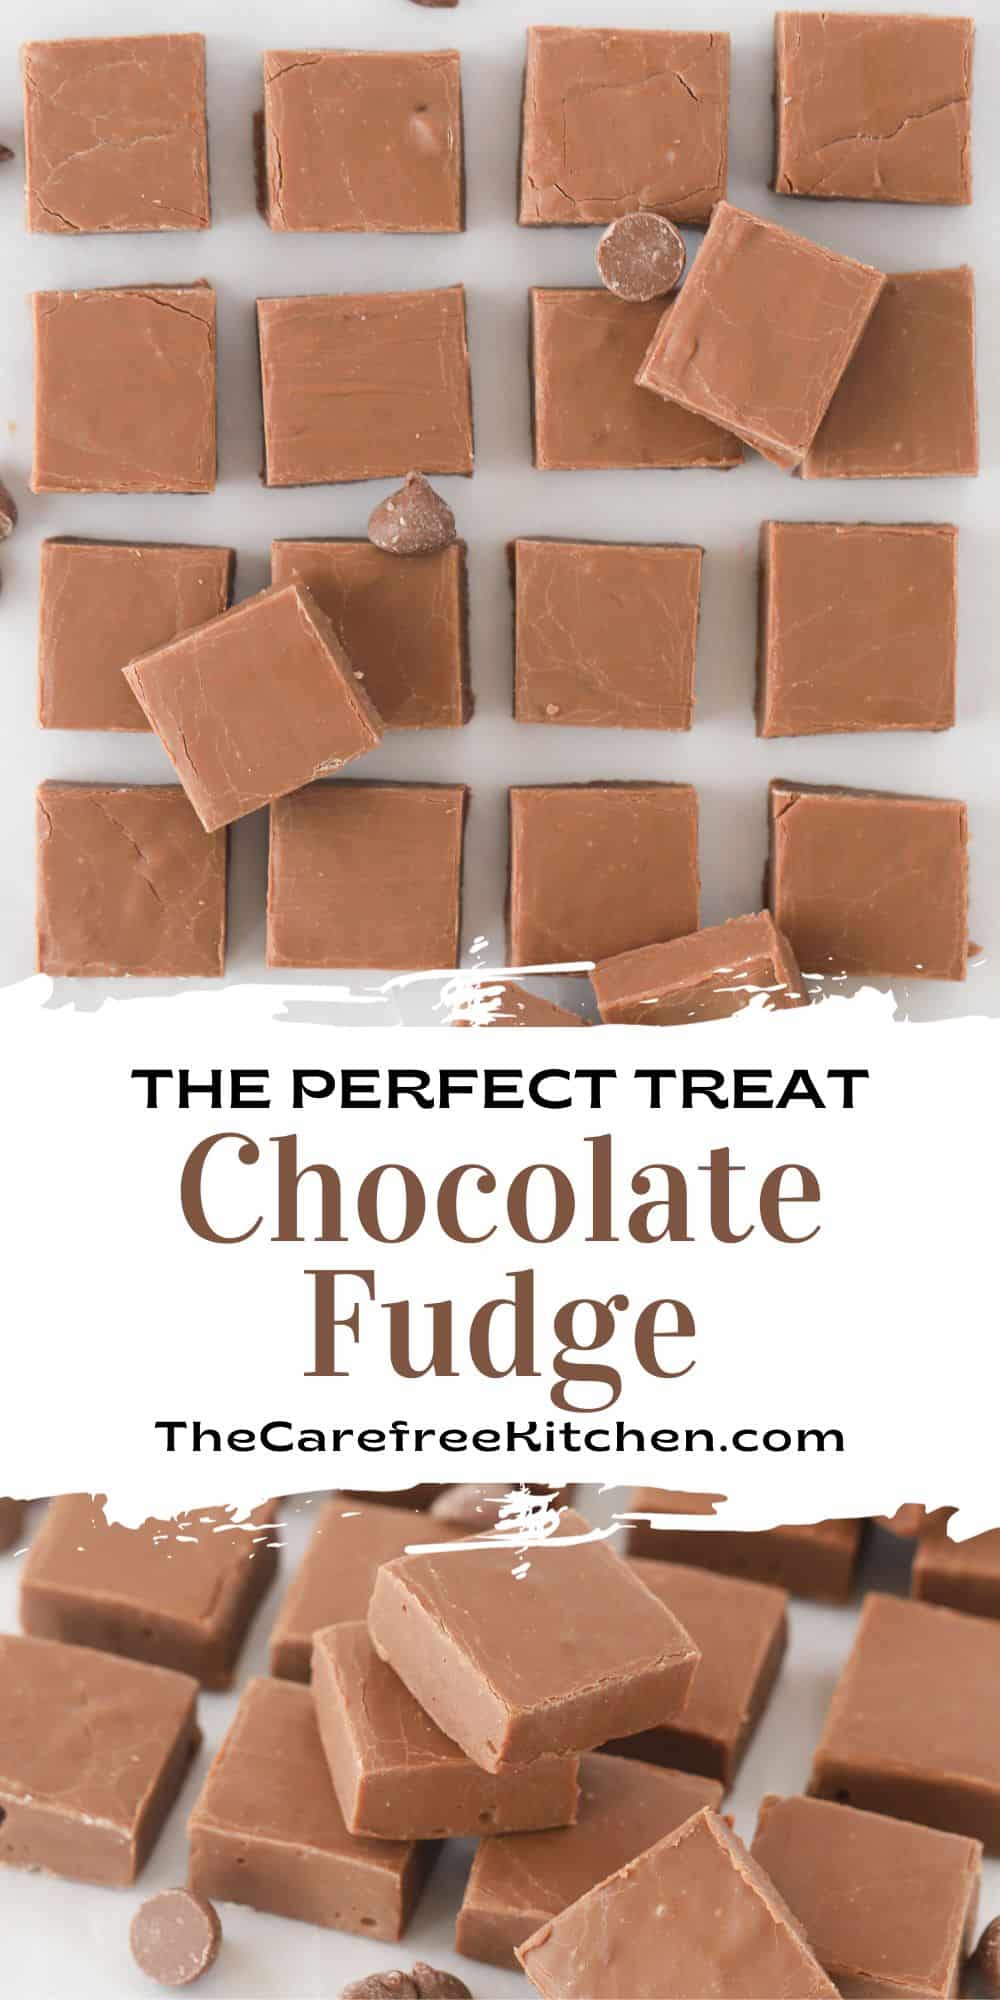 Easy Homemade Chocolate Fudge - The Carefree Kitchen